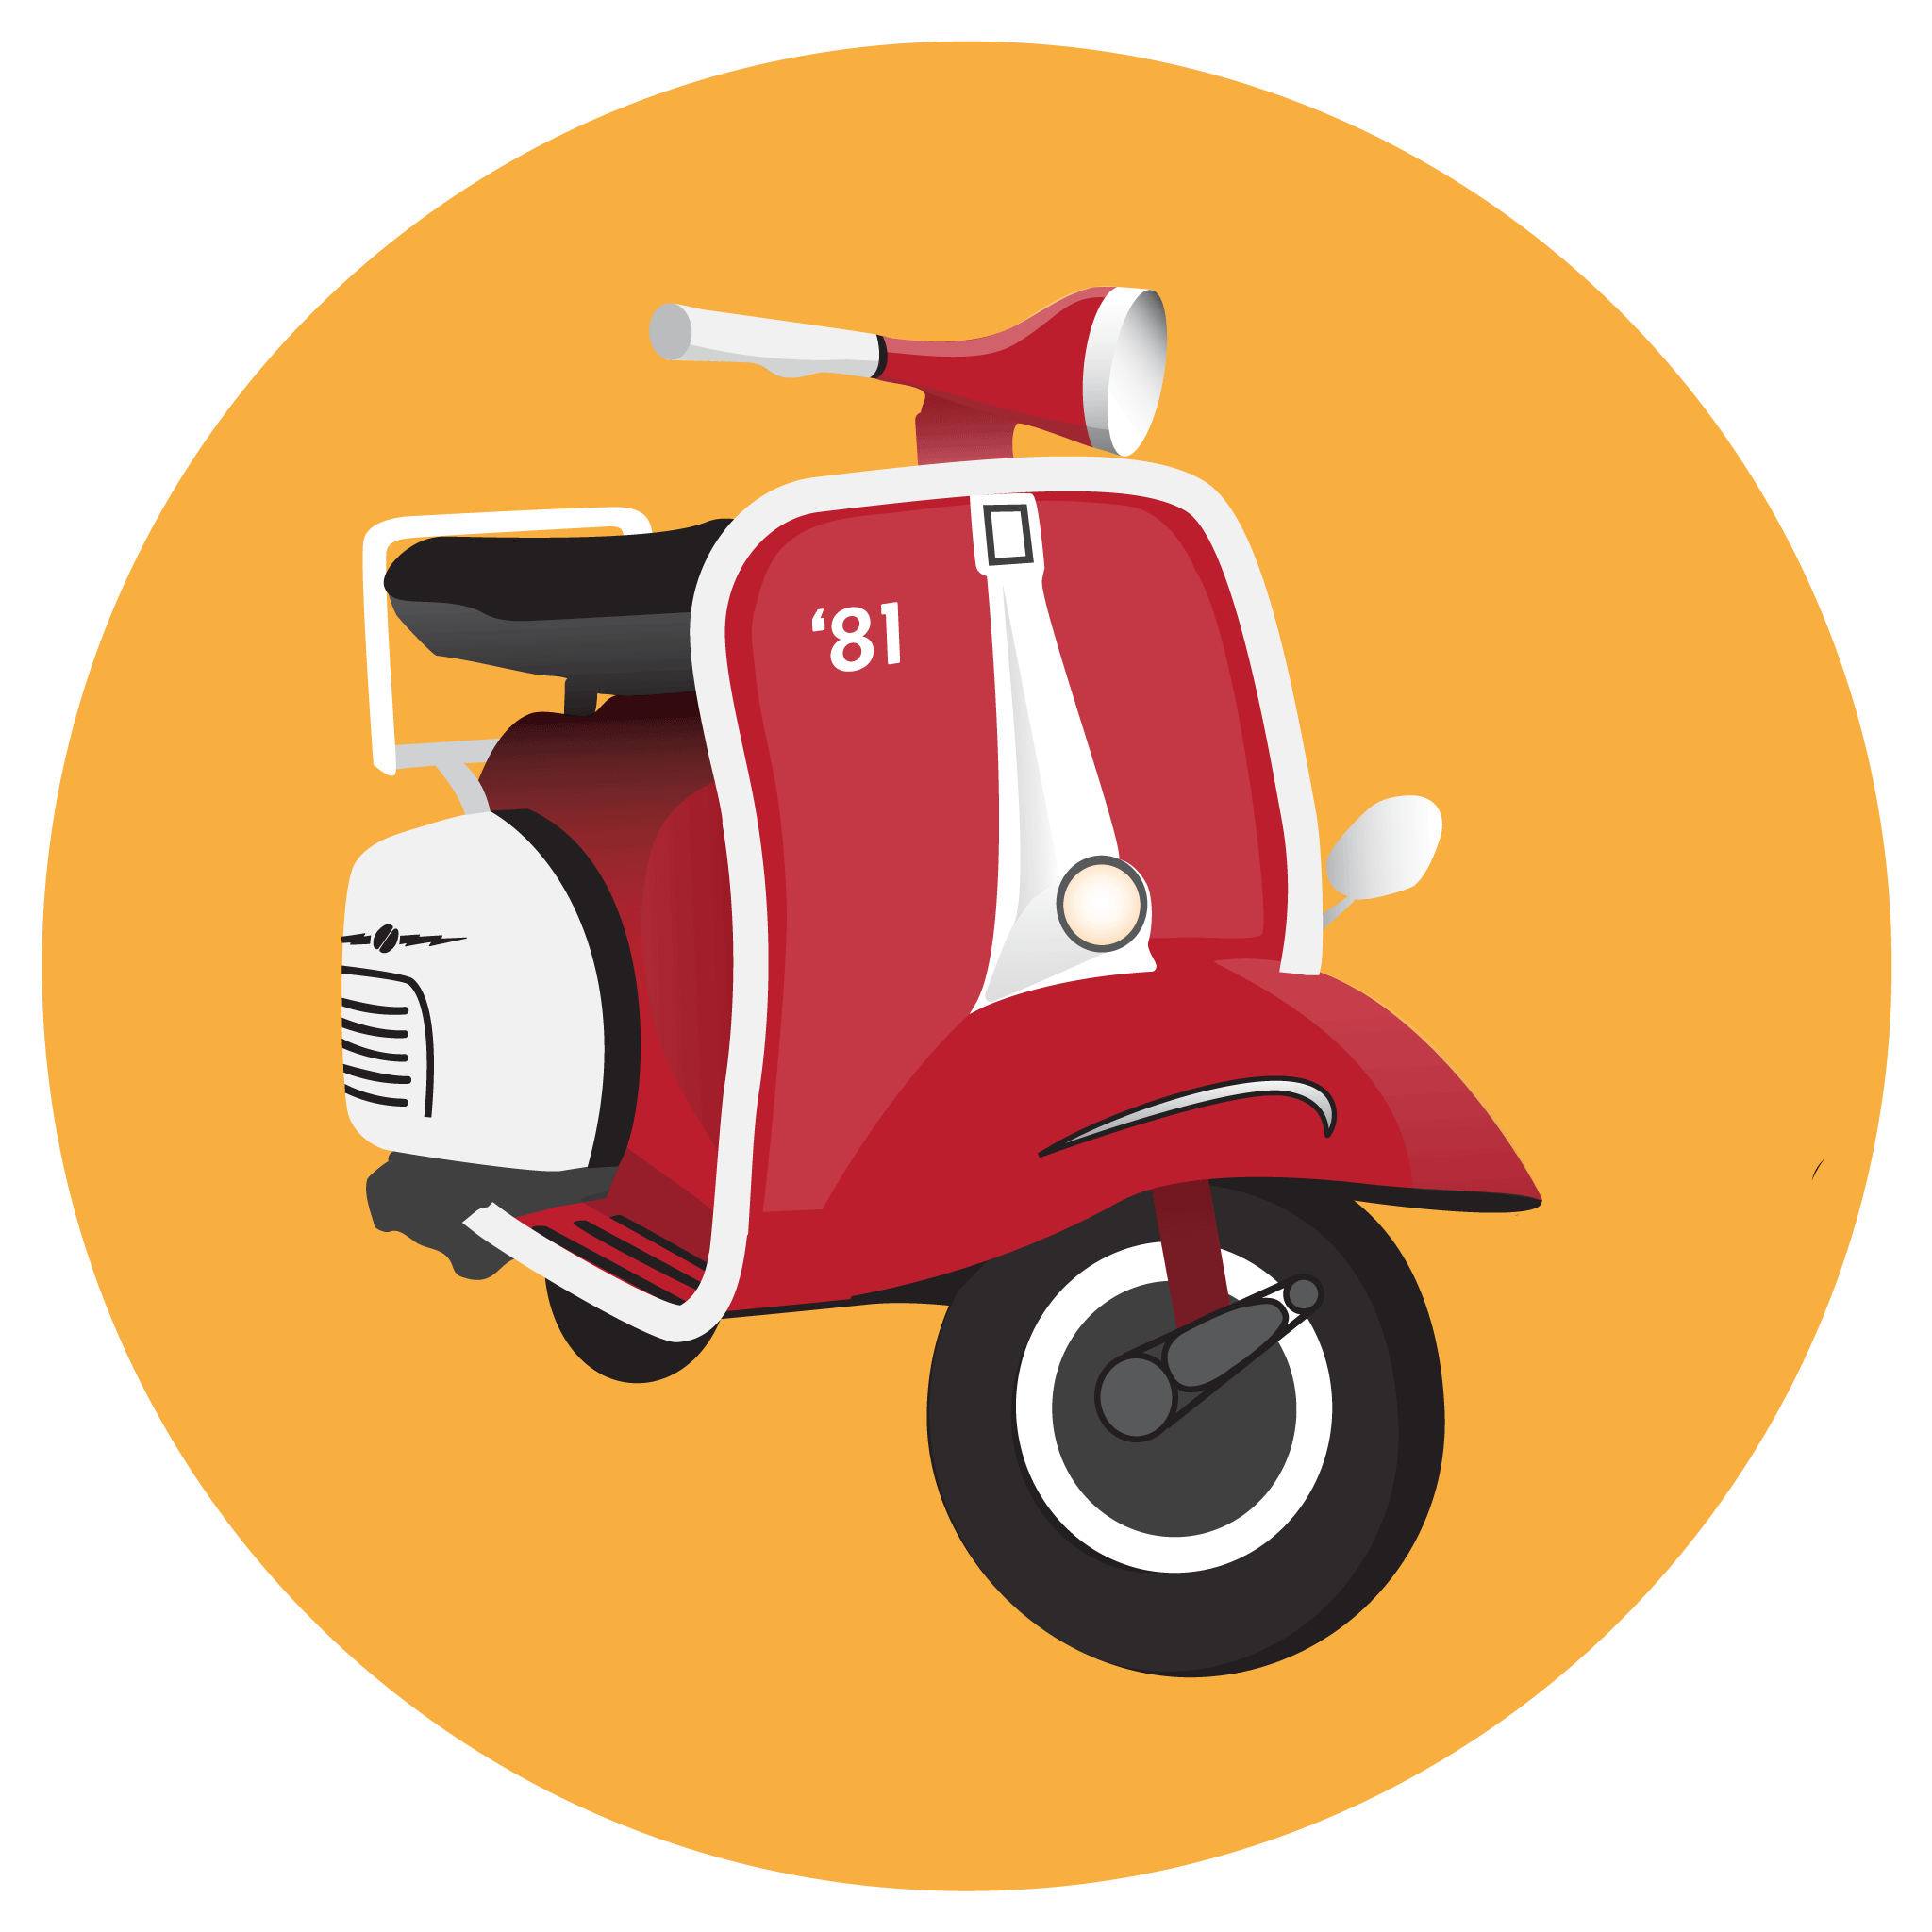 An illustration of a vespa motorcycle